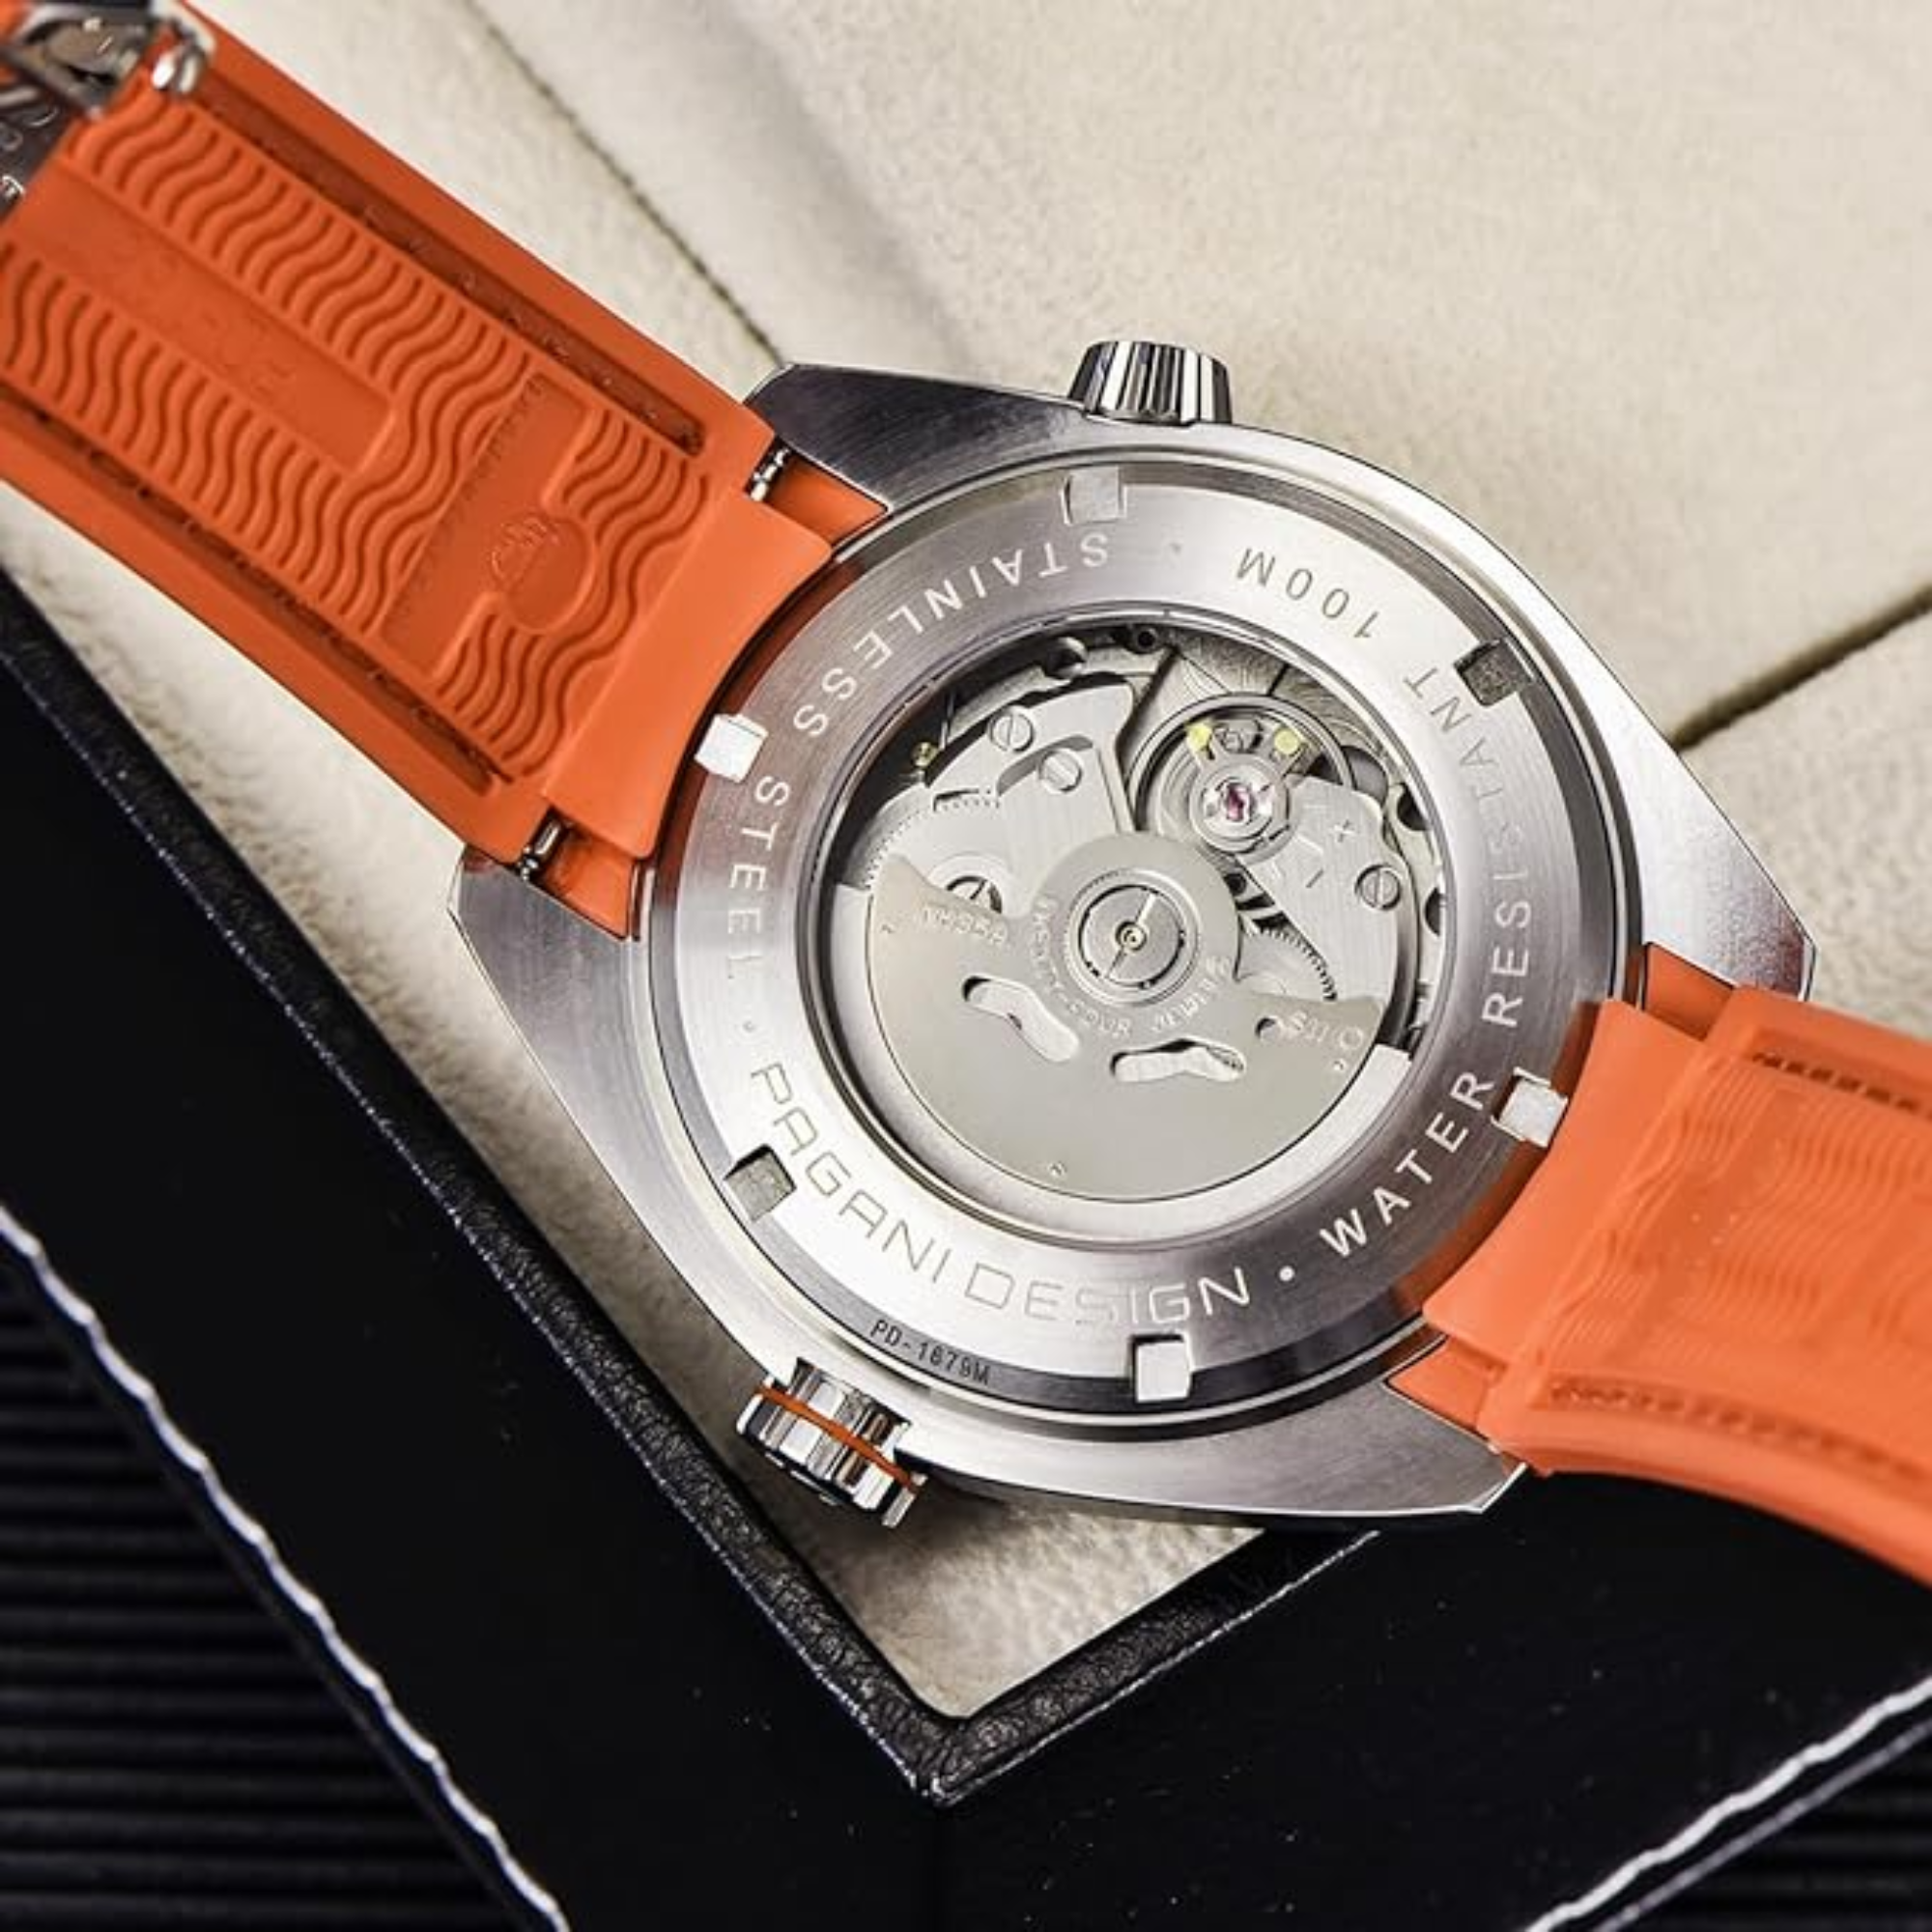 Pagani Design PD-1679M 42MM (Japanese NH-35 Automatic Movement) Mechanical Watch 100M Waterproof Dive Watch Sapphire Stainless Steel Bracelet Watch 